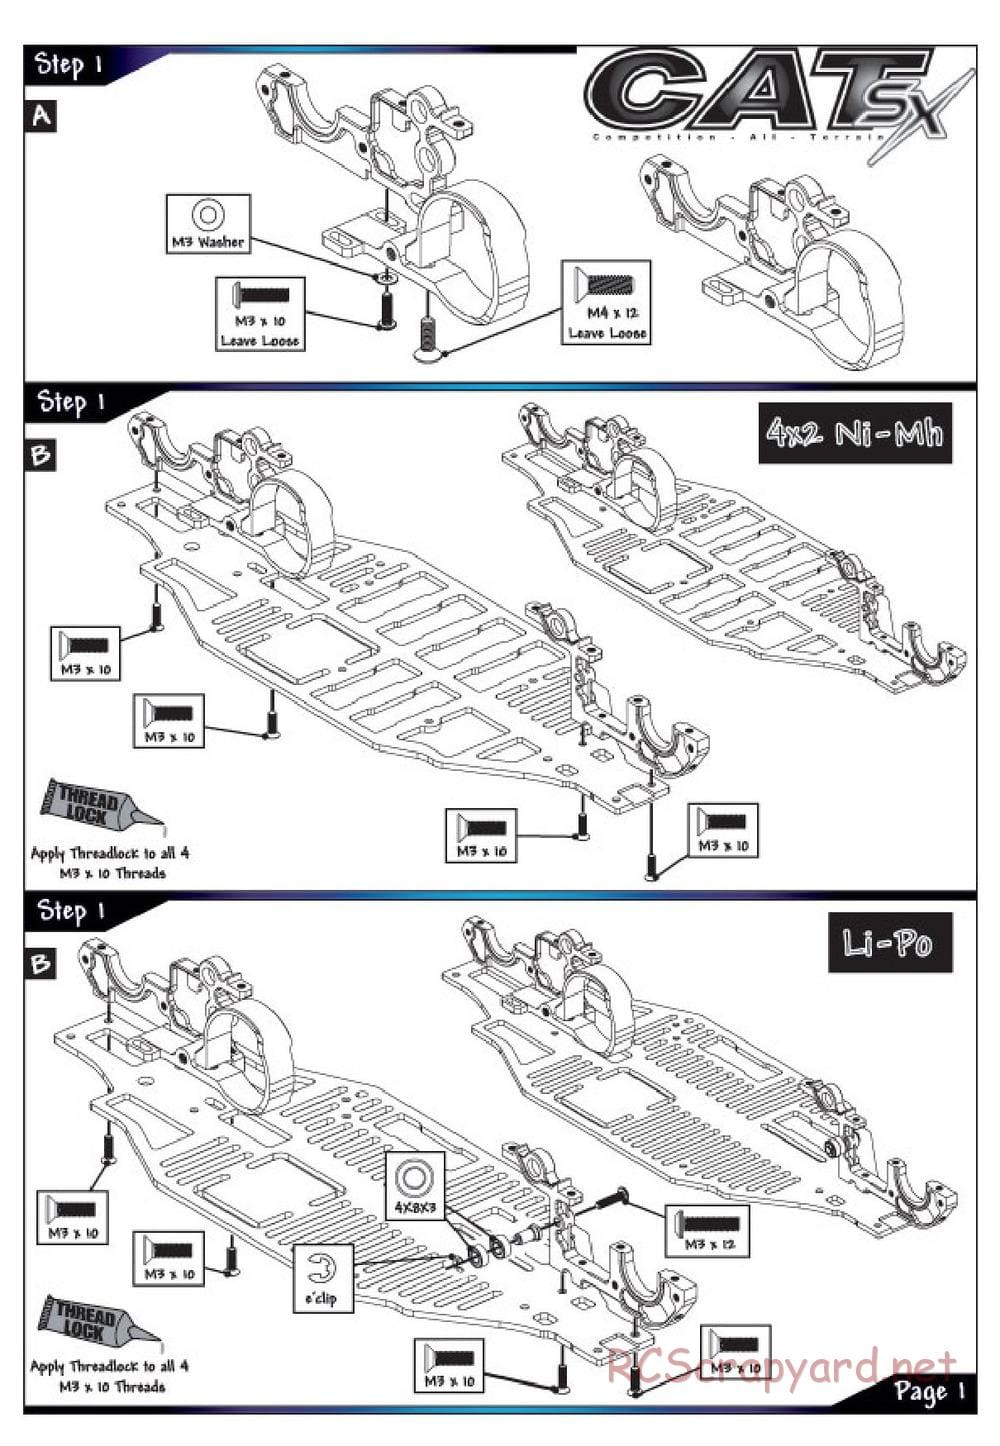 Schumacher - Cat SX - Manual - Page 2